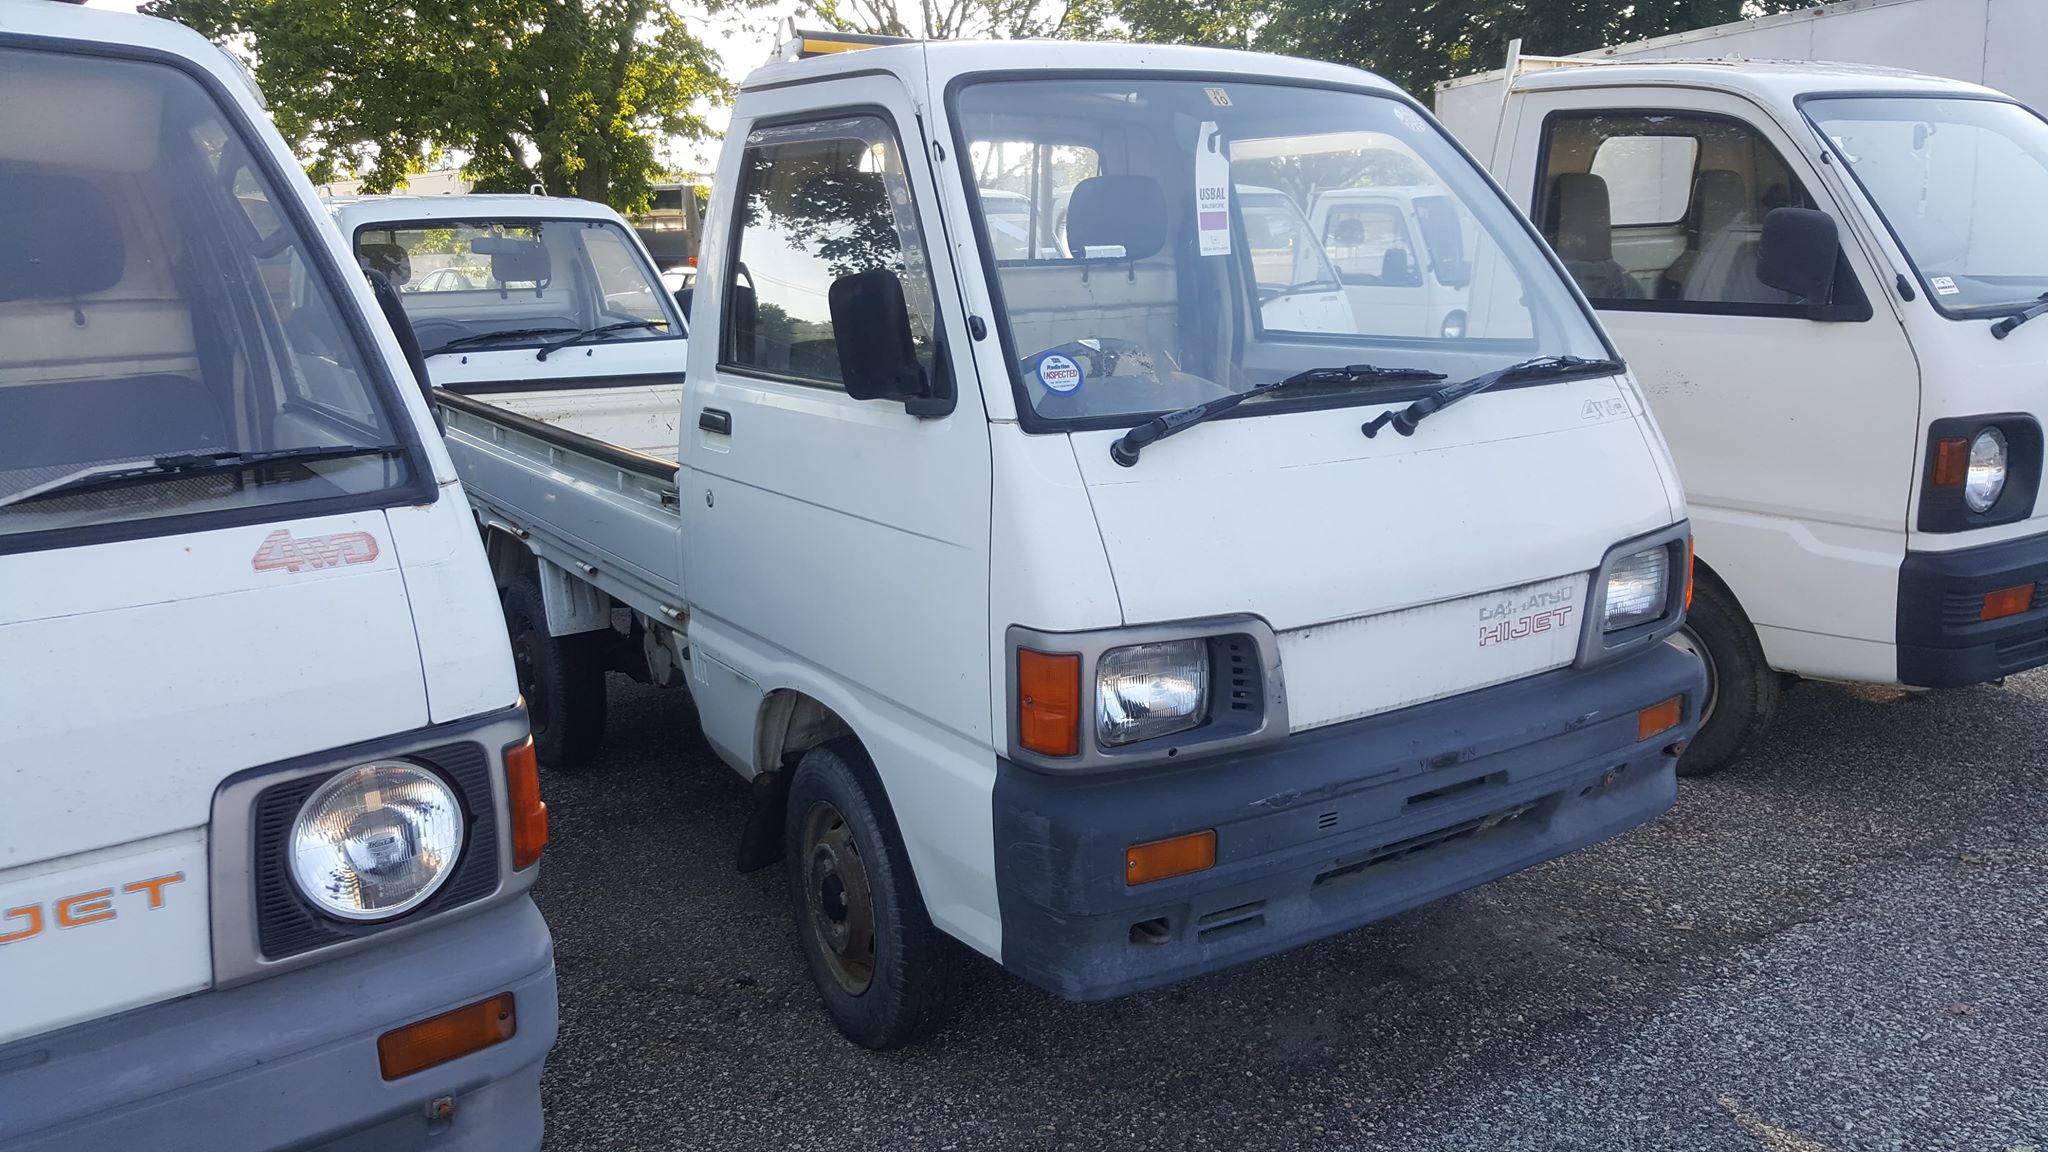 1993 Daihatsu Hijet 4WD - $5,500